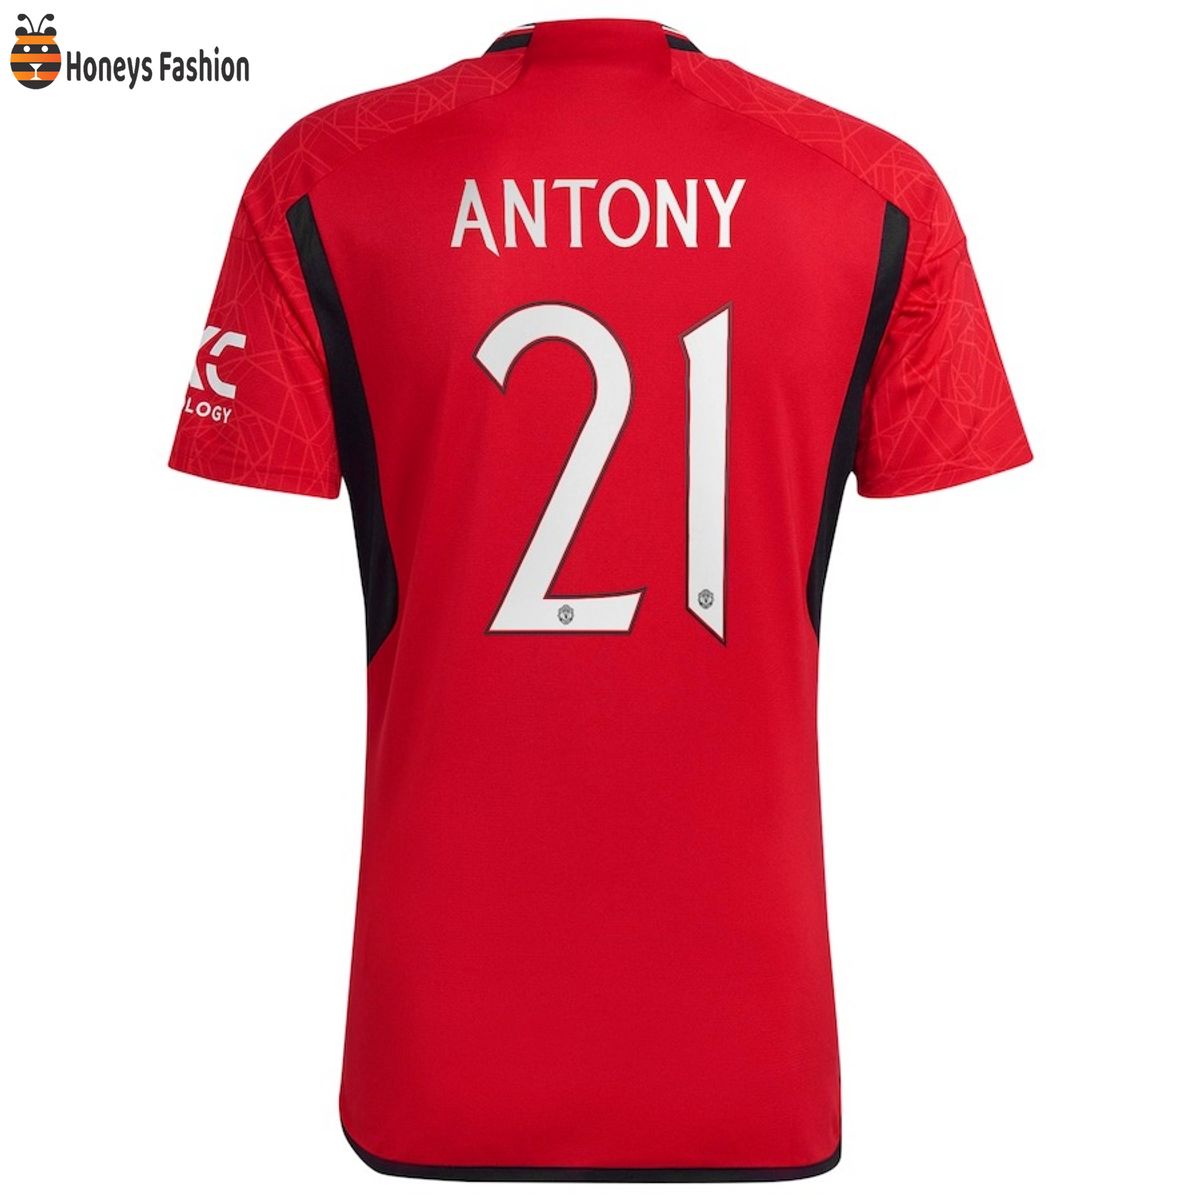 Antony 21 Manchester United Premier League 23-24 Jersey